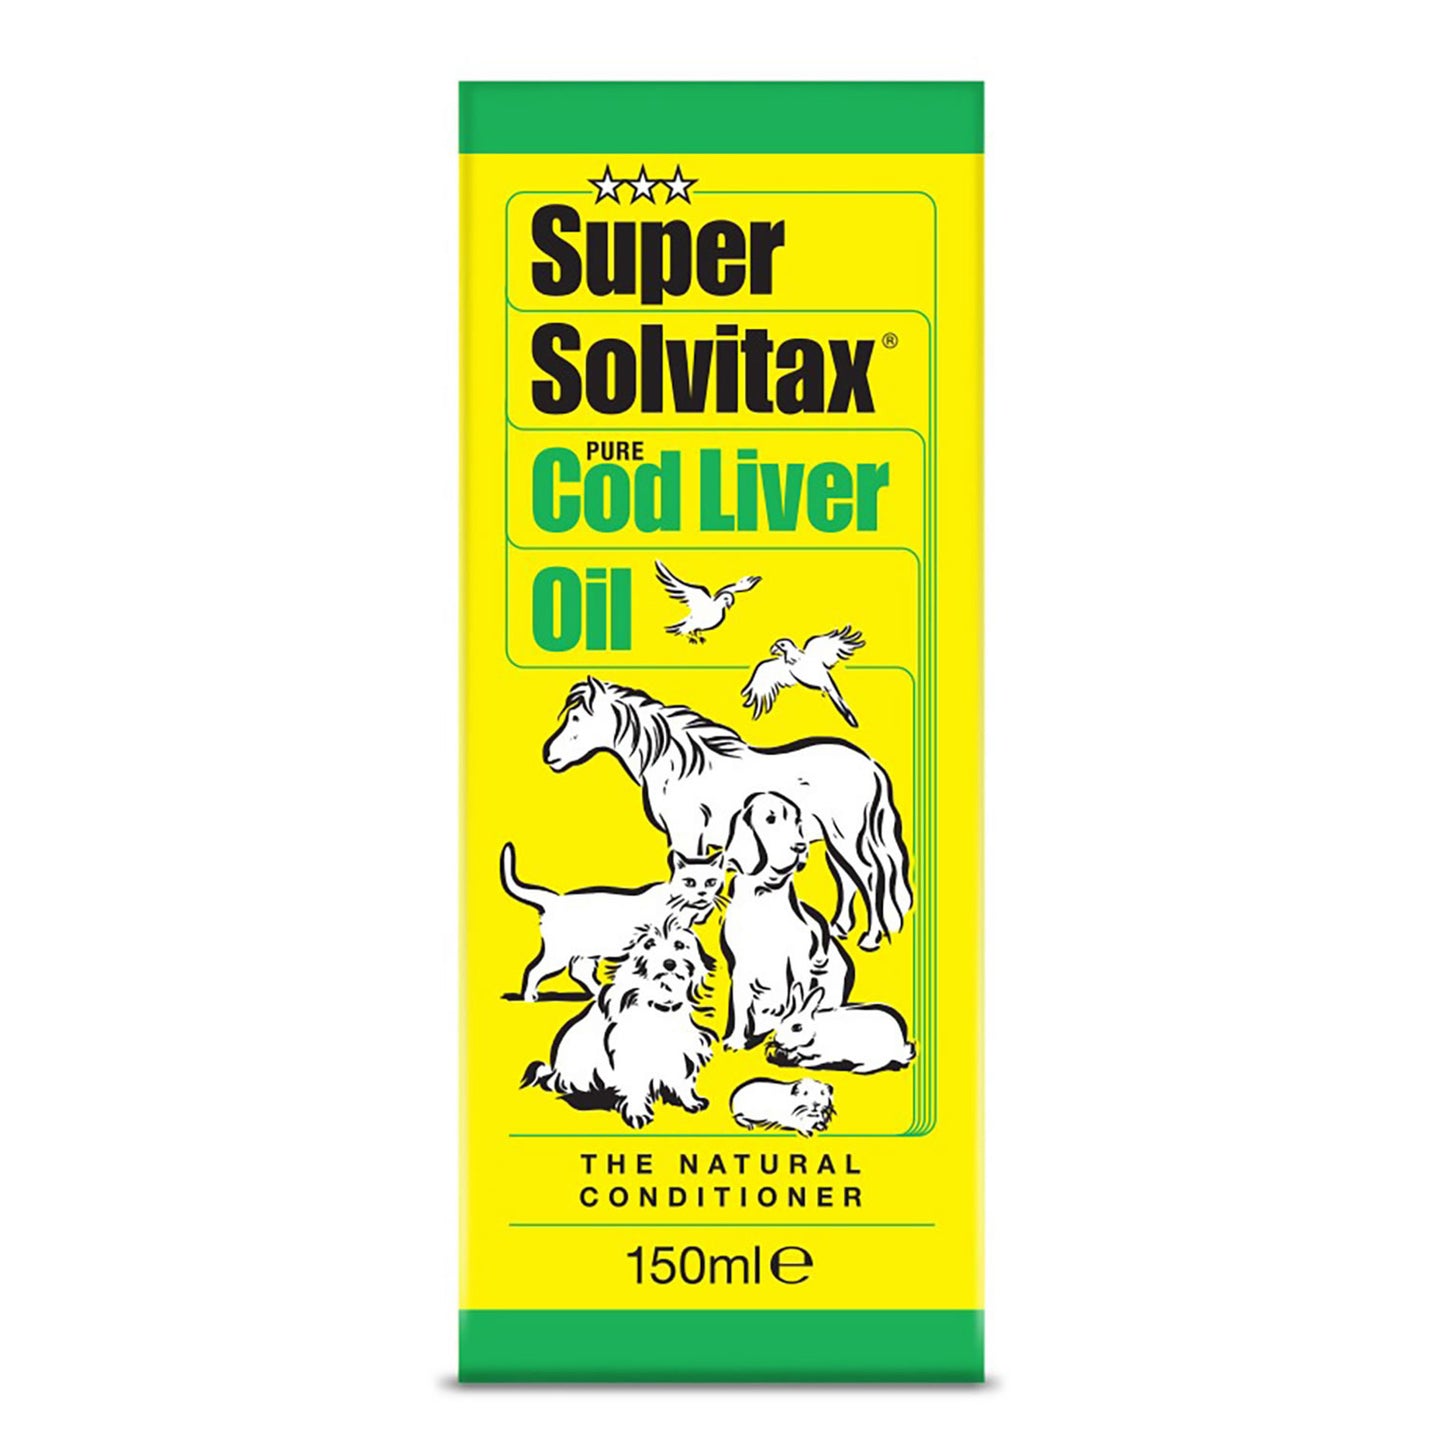 Super Solvitax | Dog & Cat Conditioning Supplement | Cod Liver Oil - 150ml